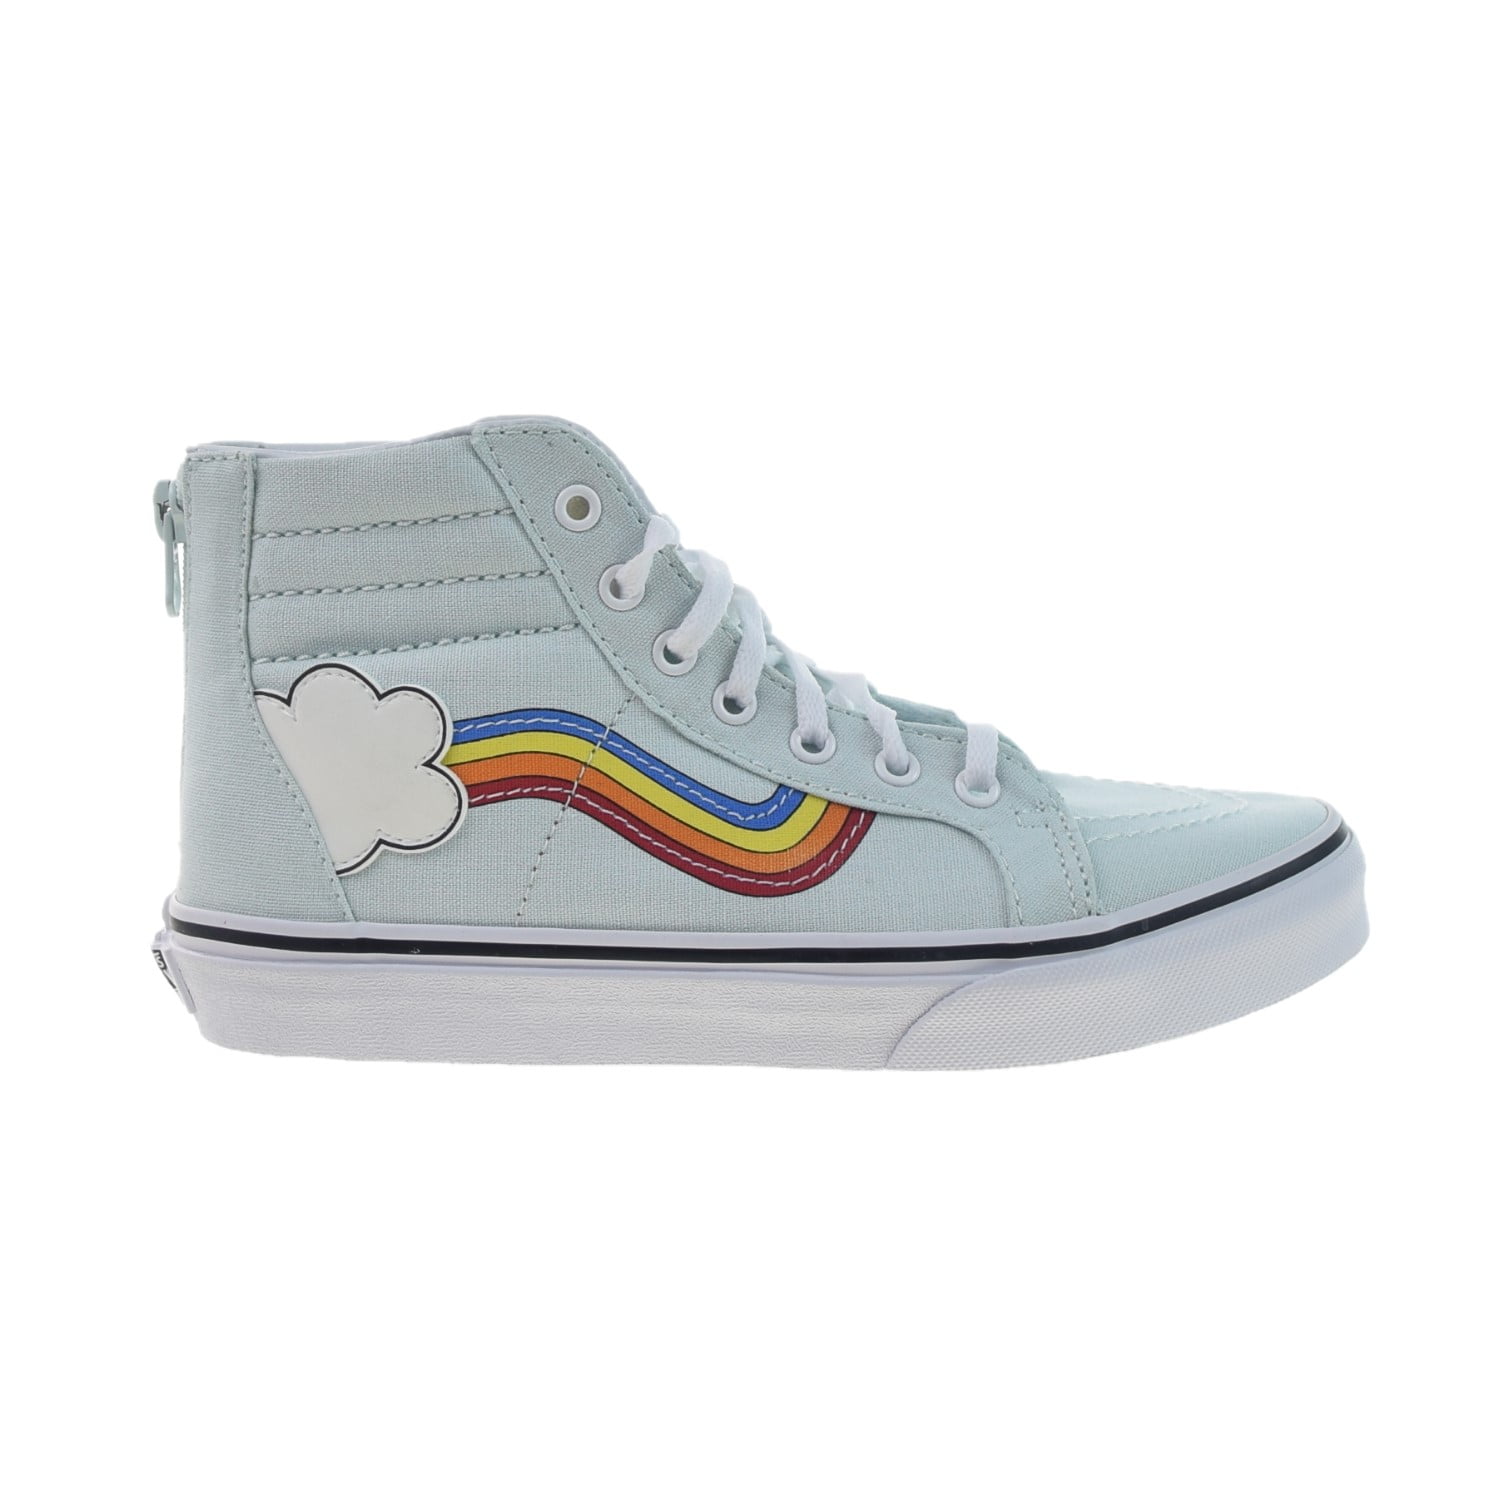 SK8-Hi Sidestripe Vans Rainbow Shoes Kids\' Blue-True vn0a3276-u4k Wan Big White Zip